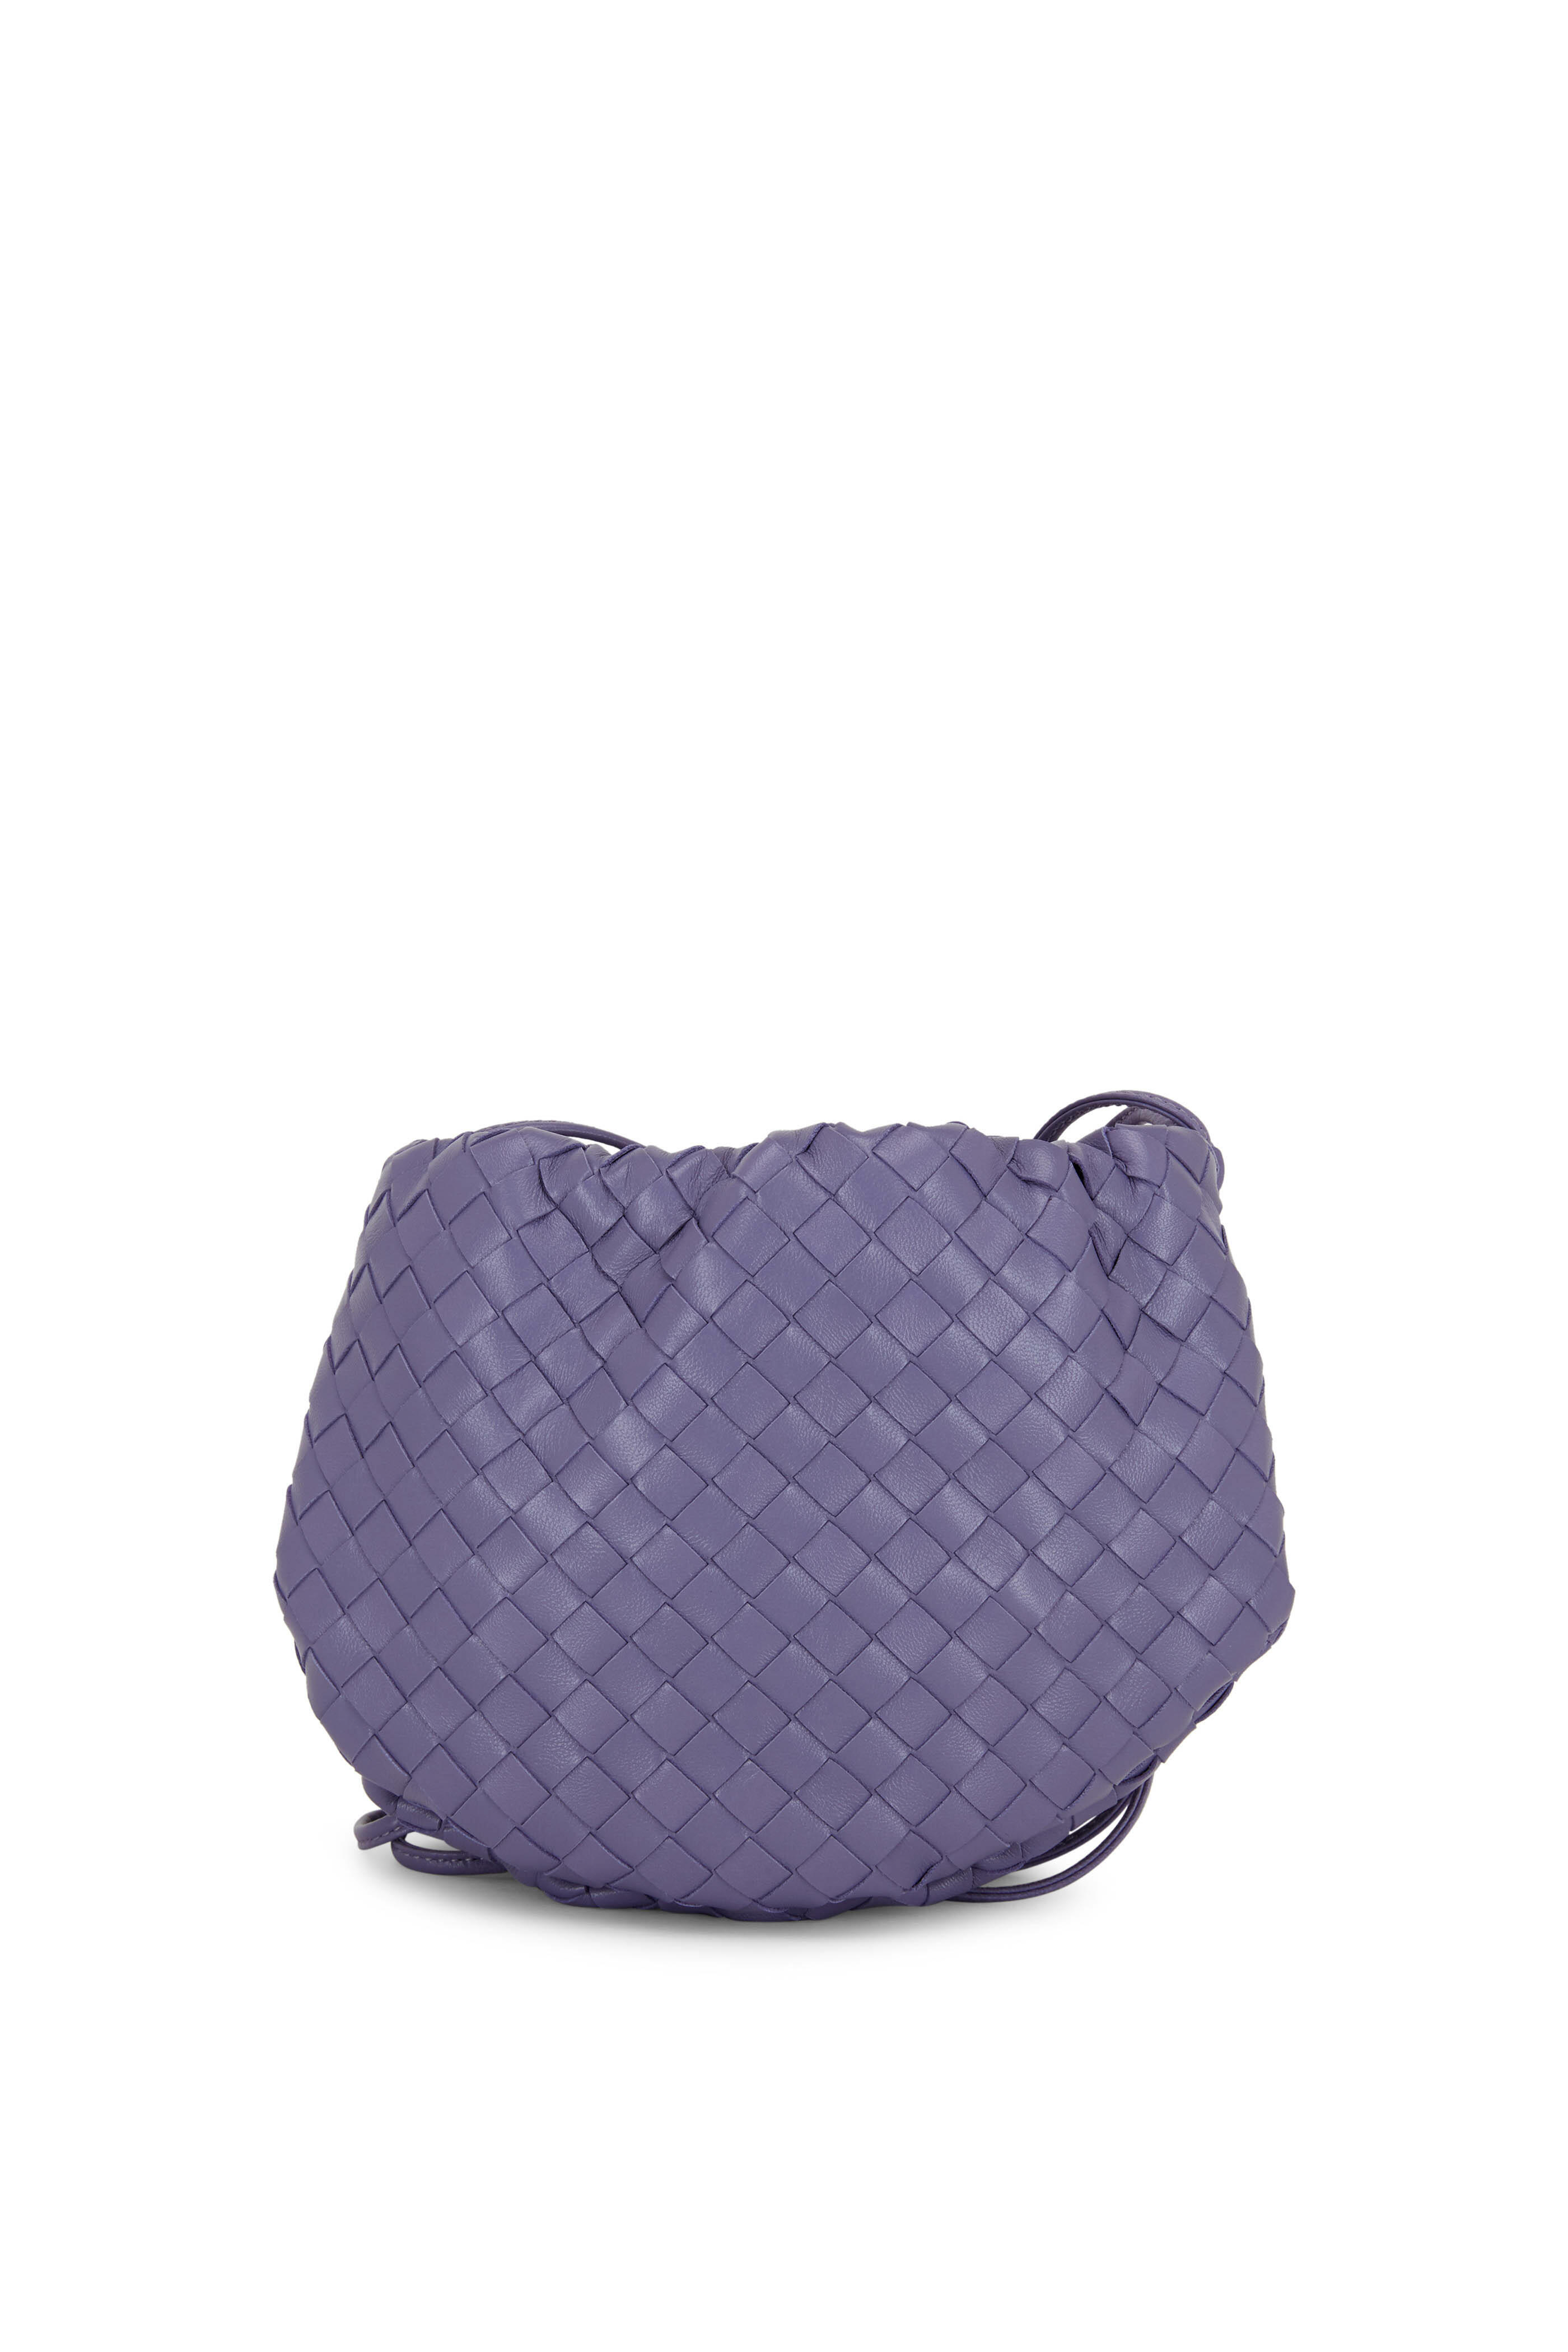 Bottega Veneta - Authenticated Loop Handbag - Leather Blue Plain for Women, Very Good Condition